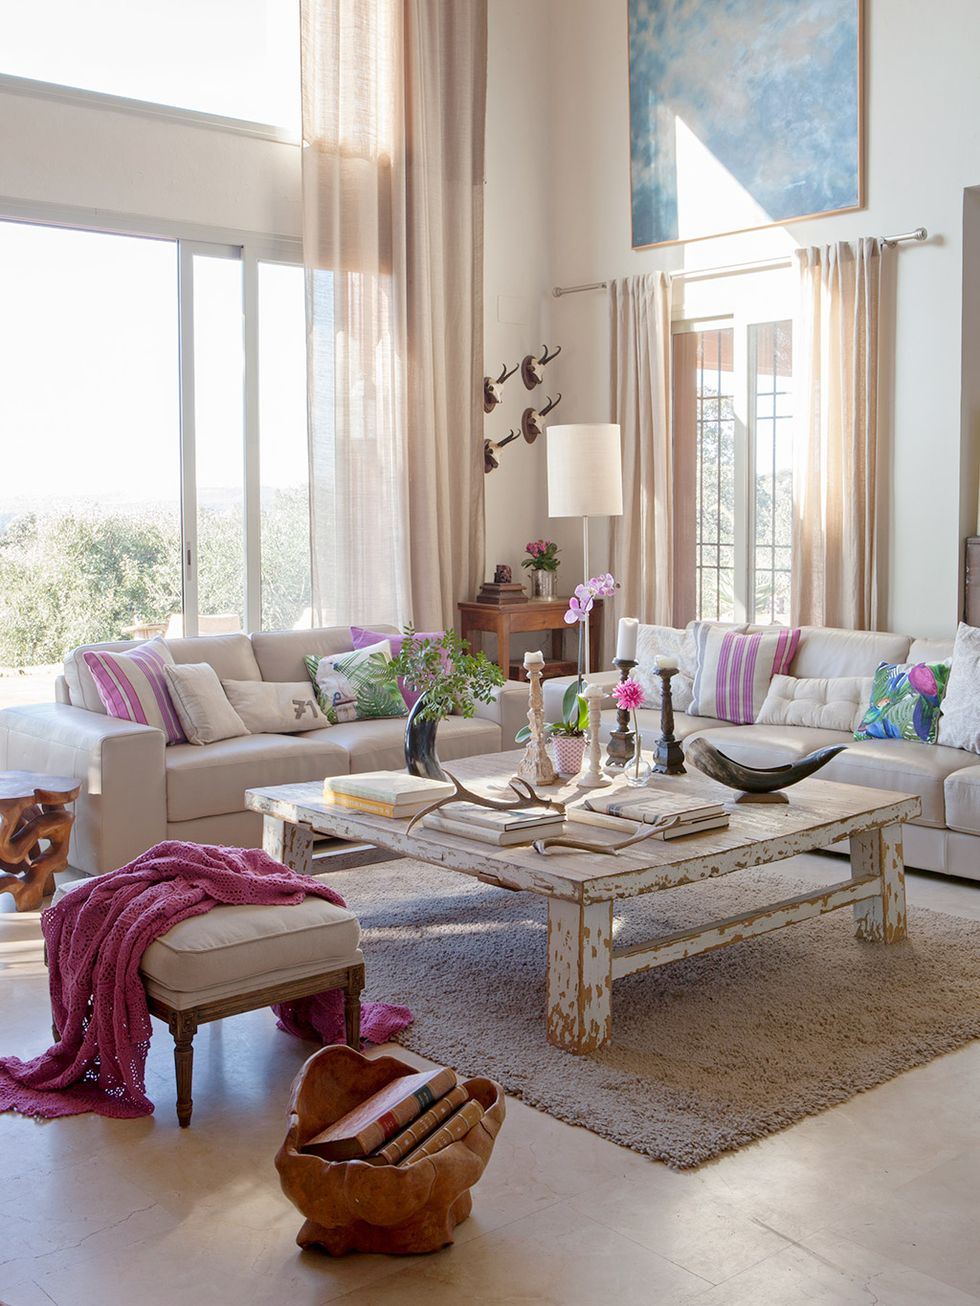 interior design, room, living room, furniture, table, home, couch, interior design, floor, purple,